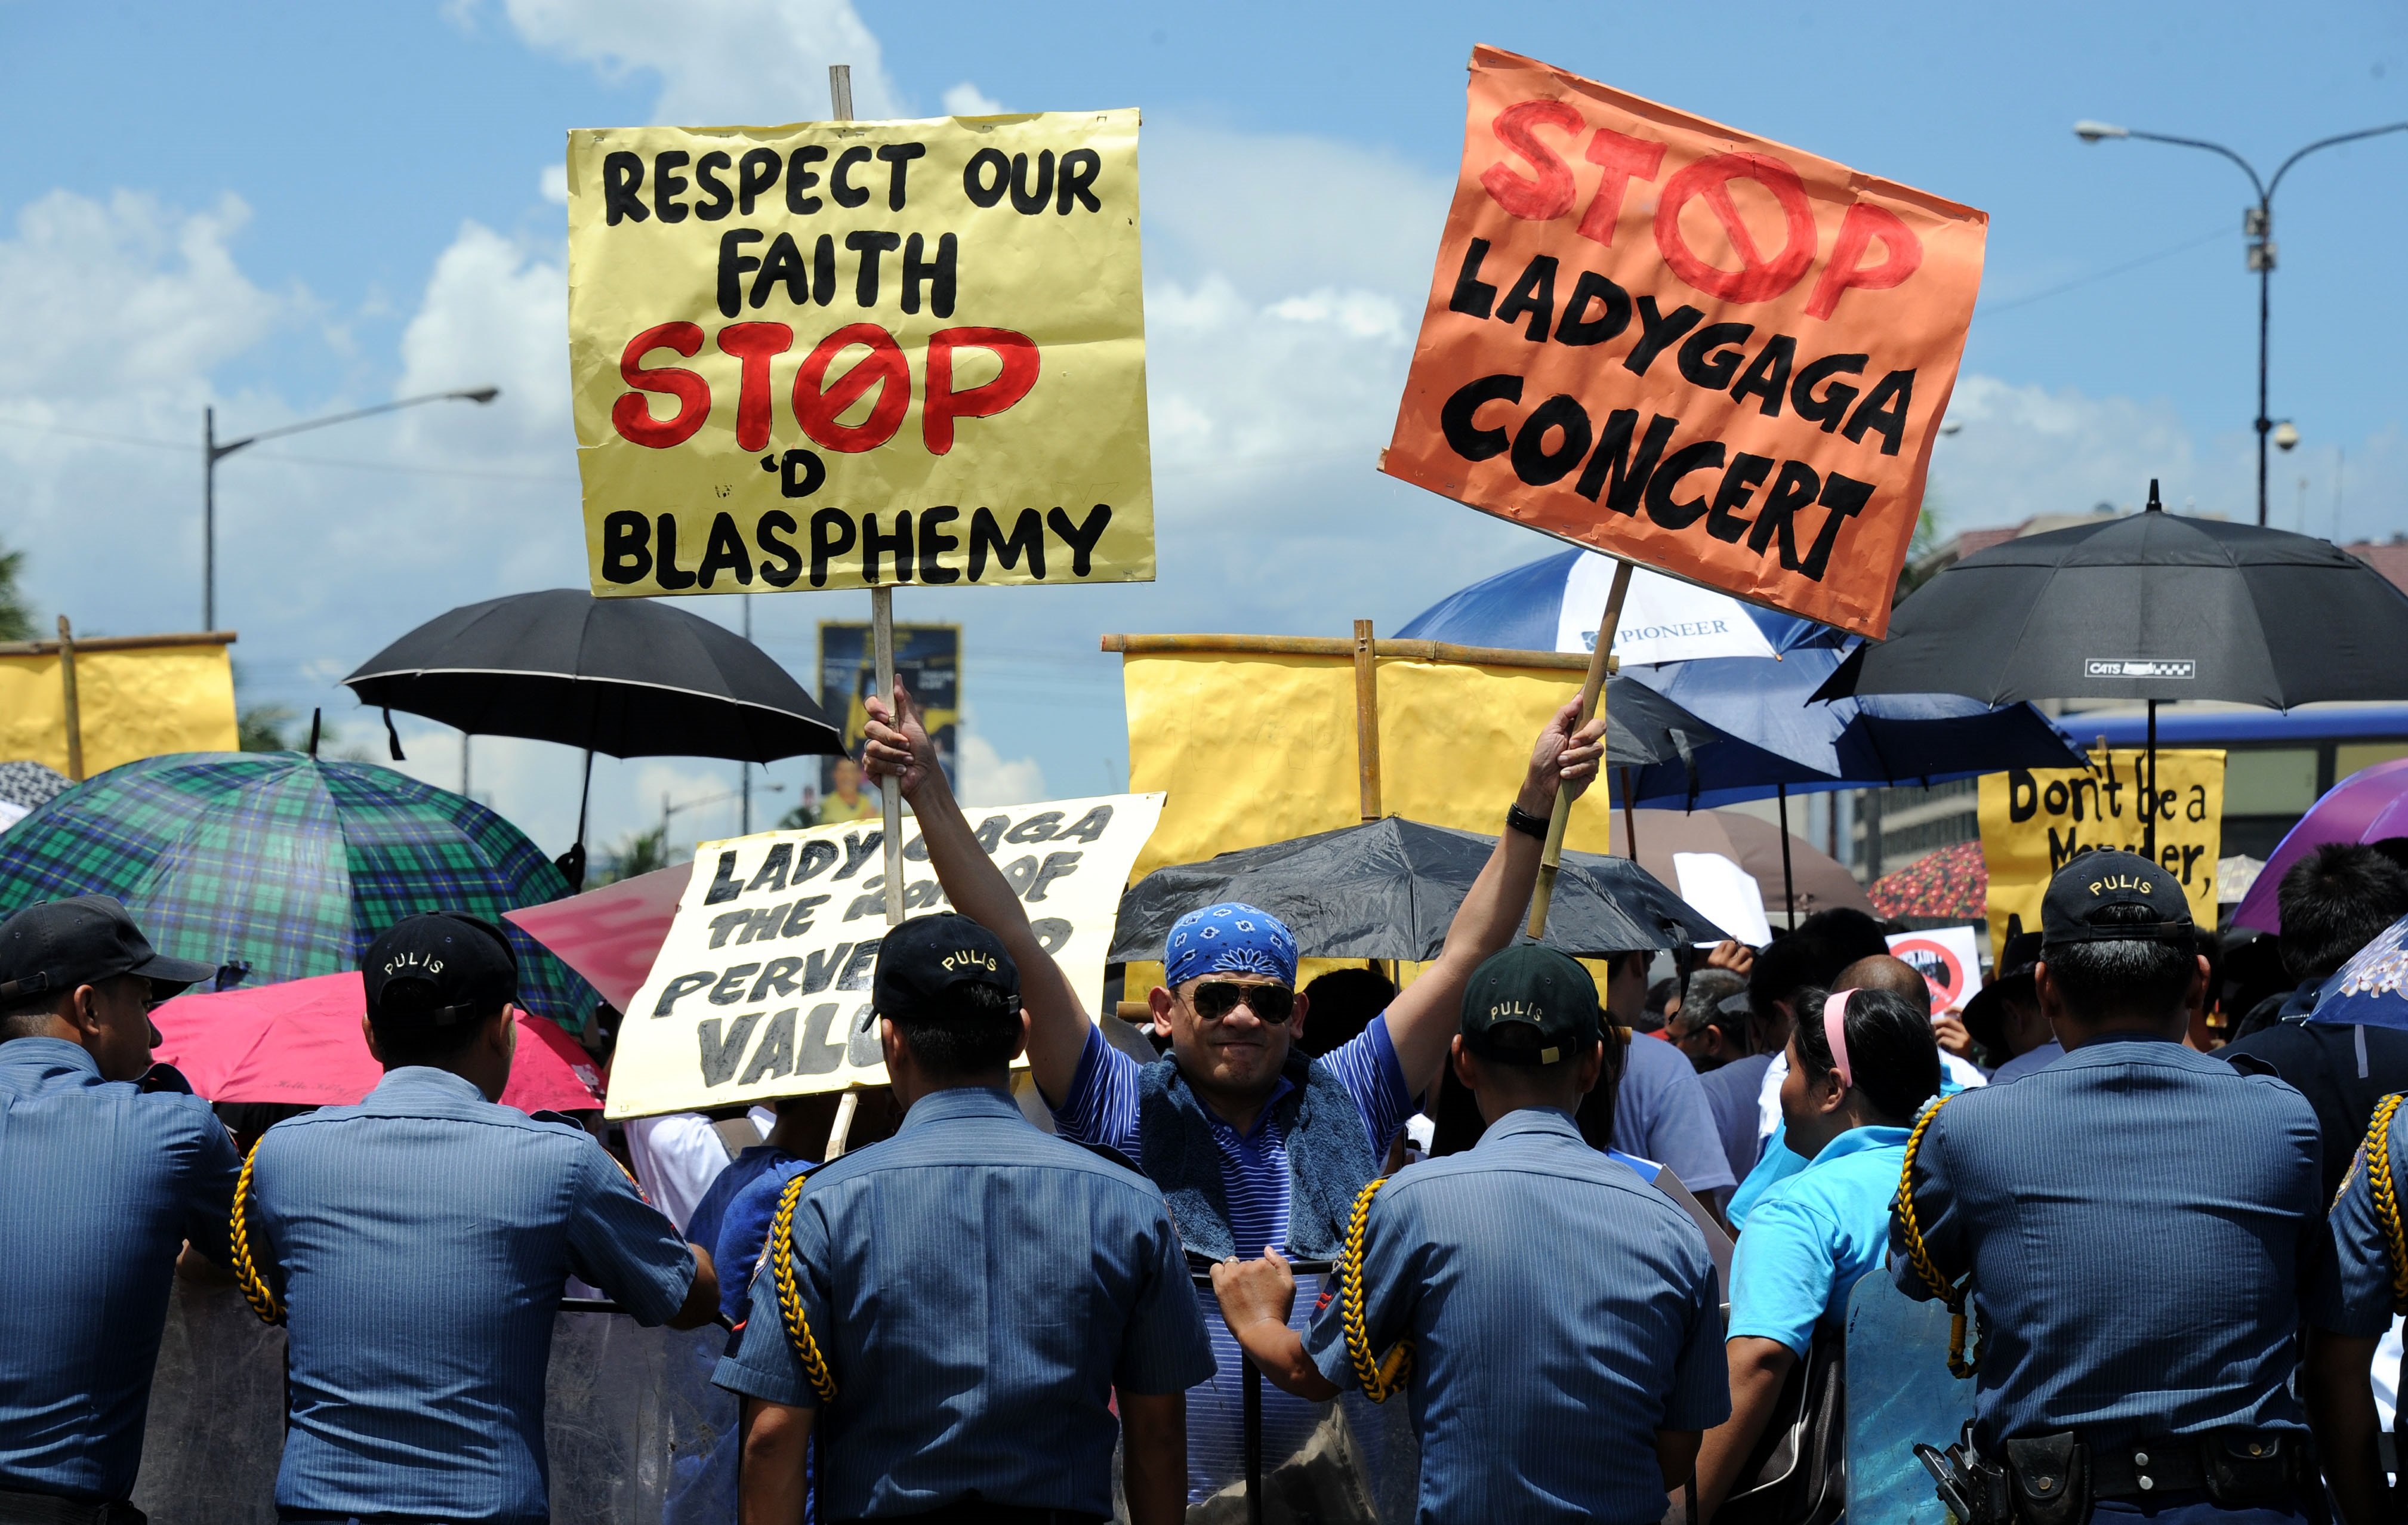 Protes terhadap Lady Gaga di Manila